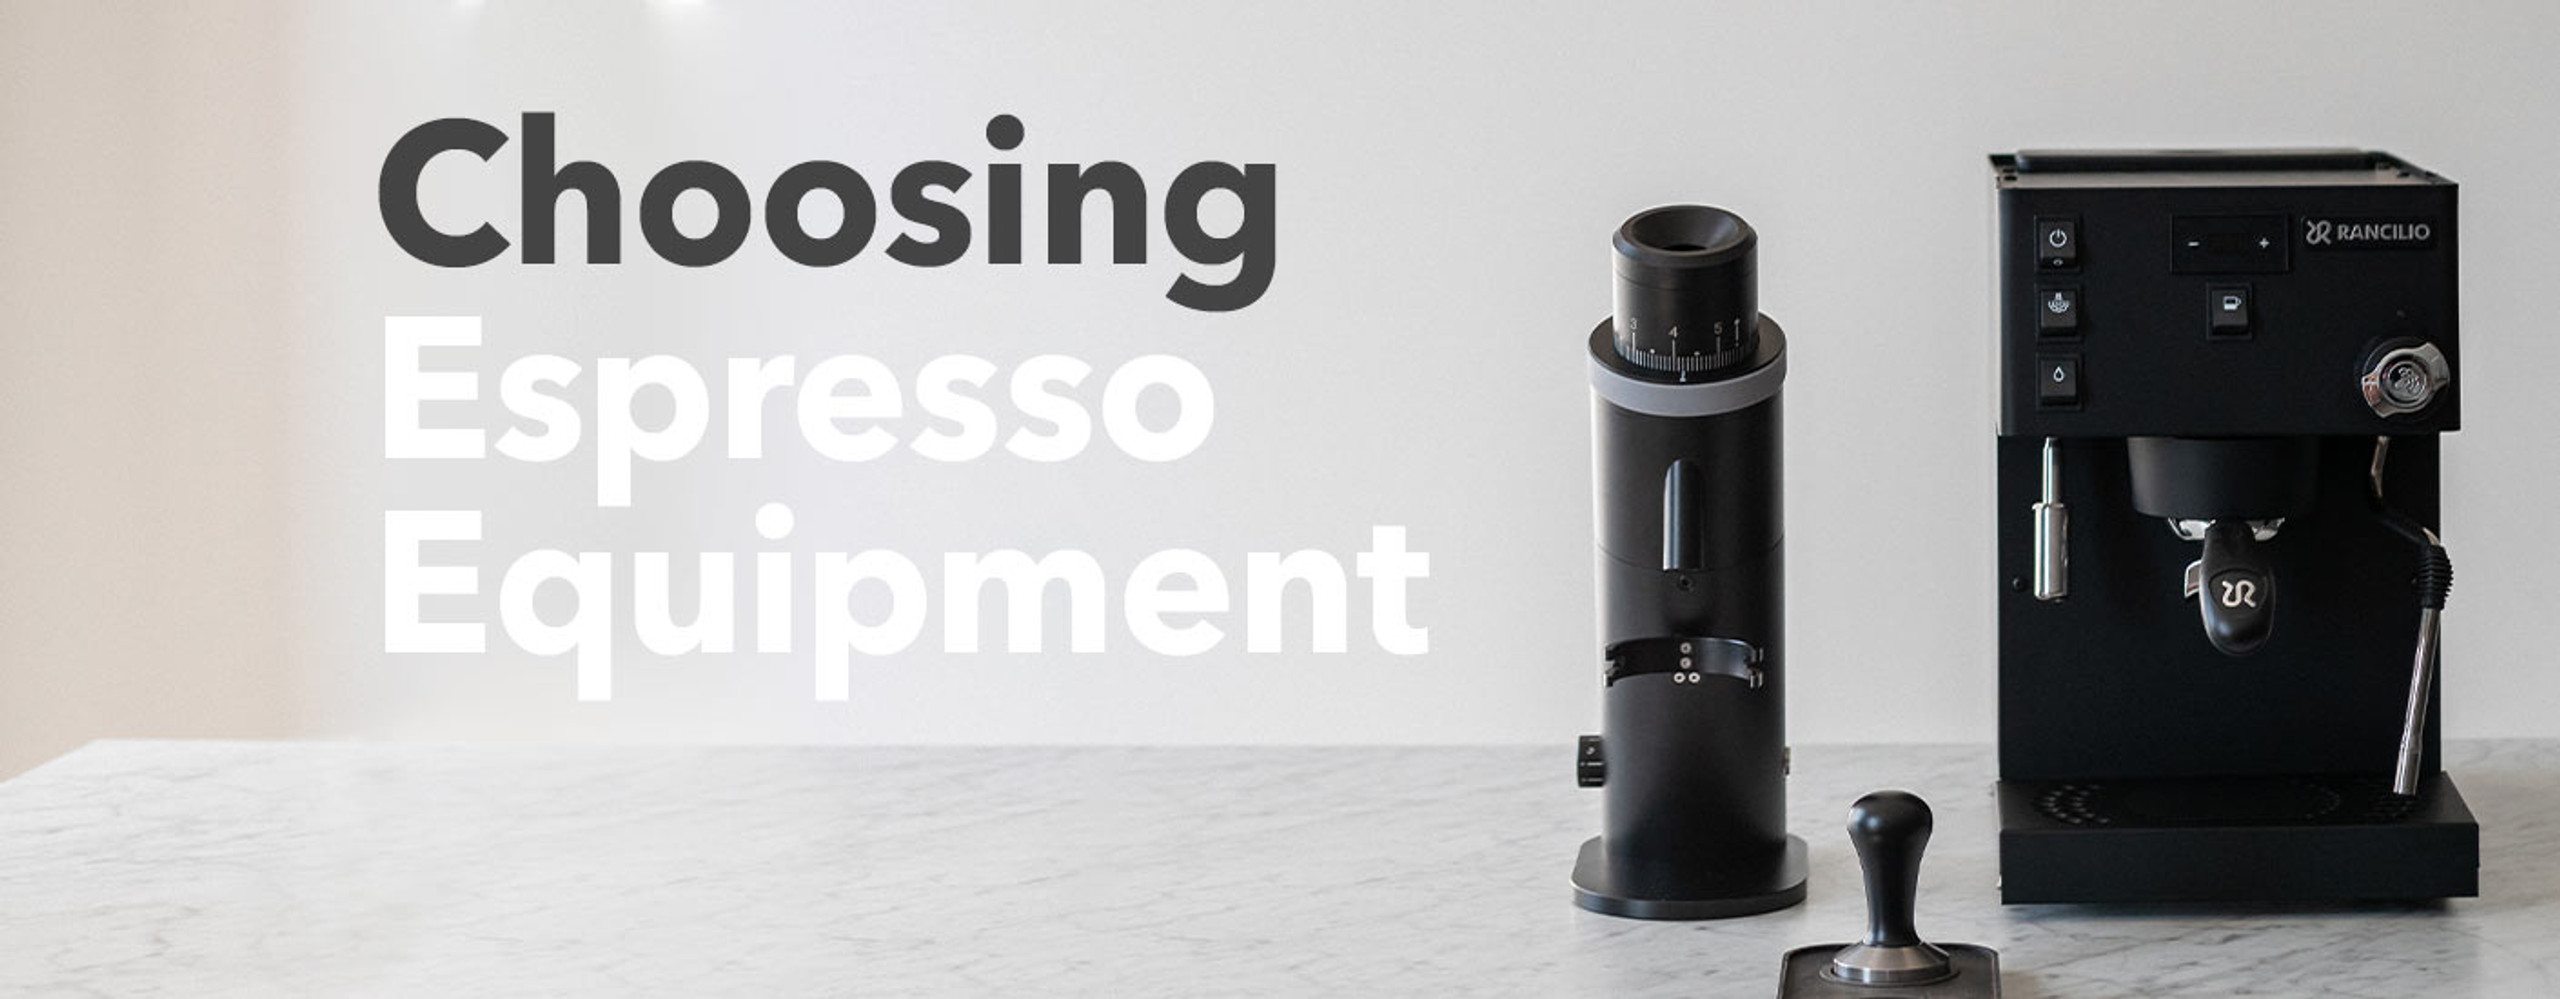 Choosing Espresso Equipment